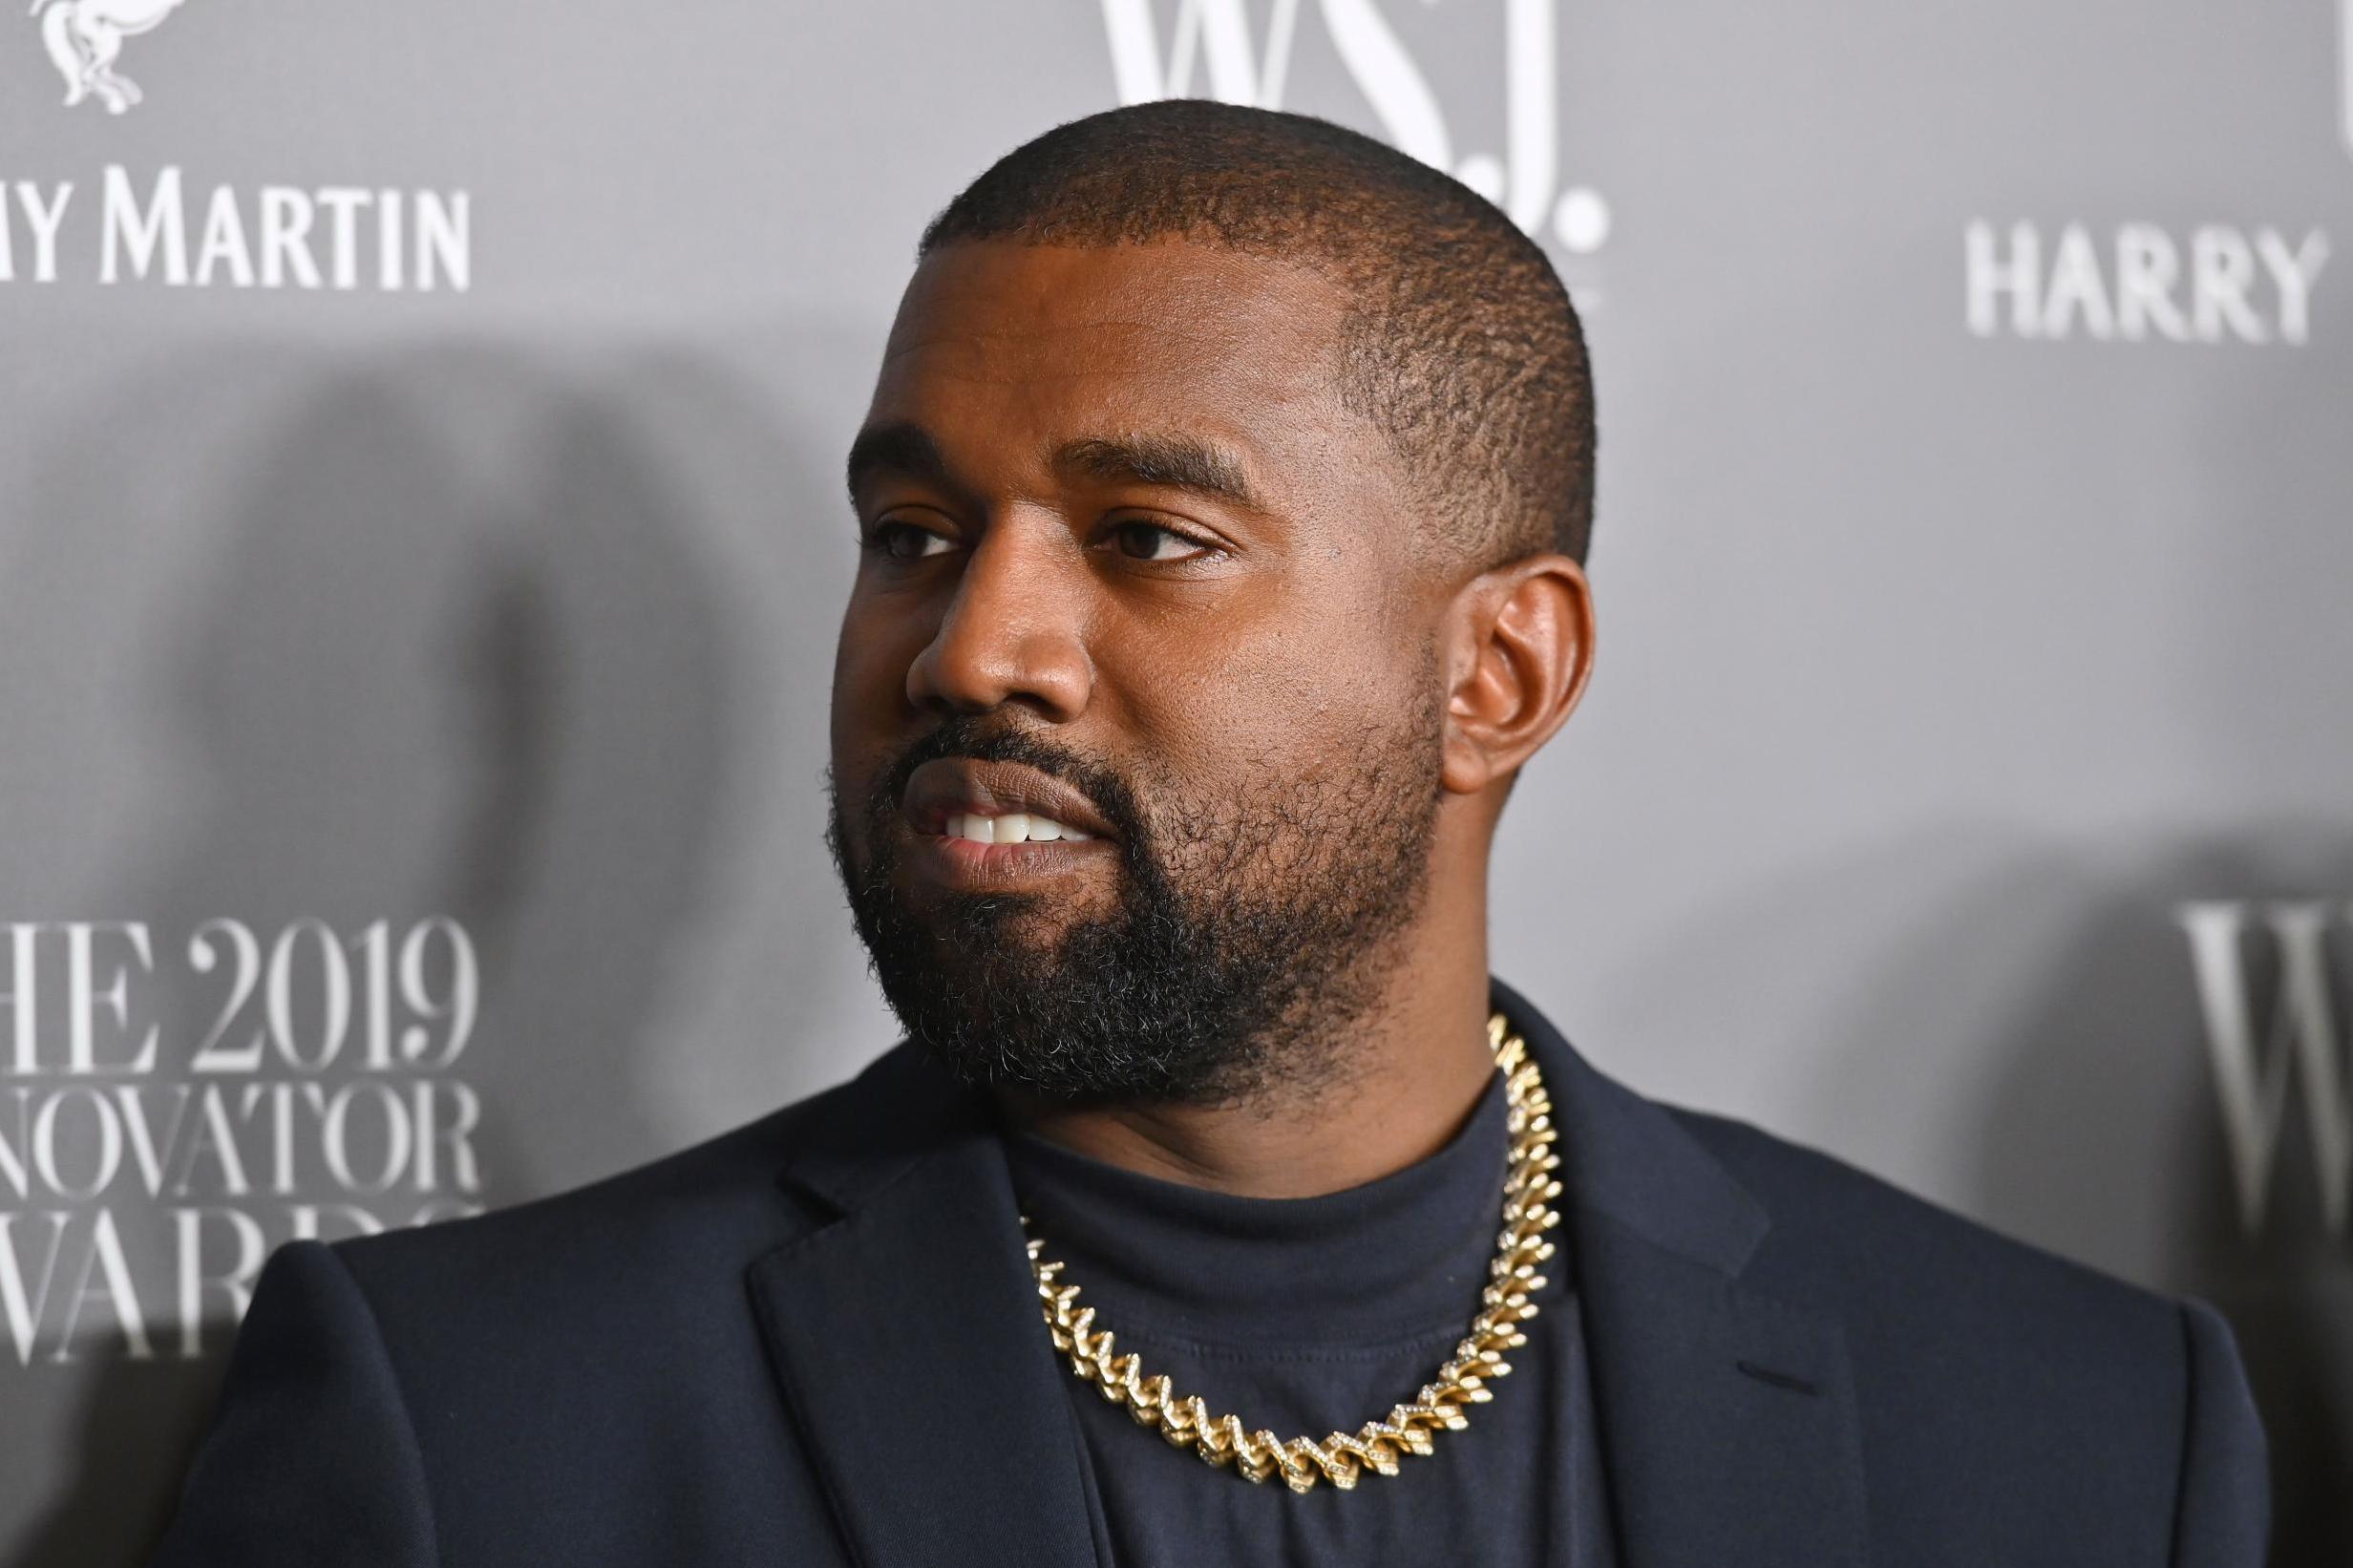 Kanye West at the WSJ Magazine 2019 Innovator Awards on 6 November 2019 in New York City.